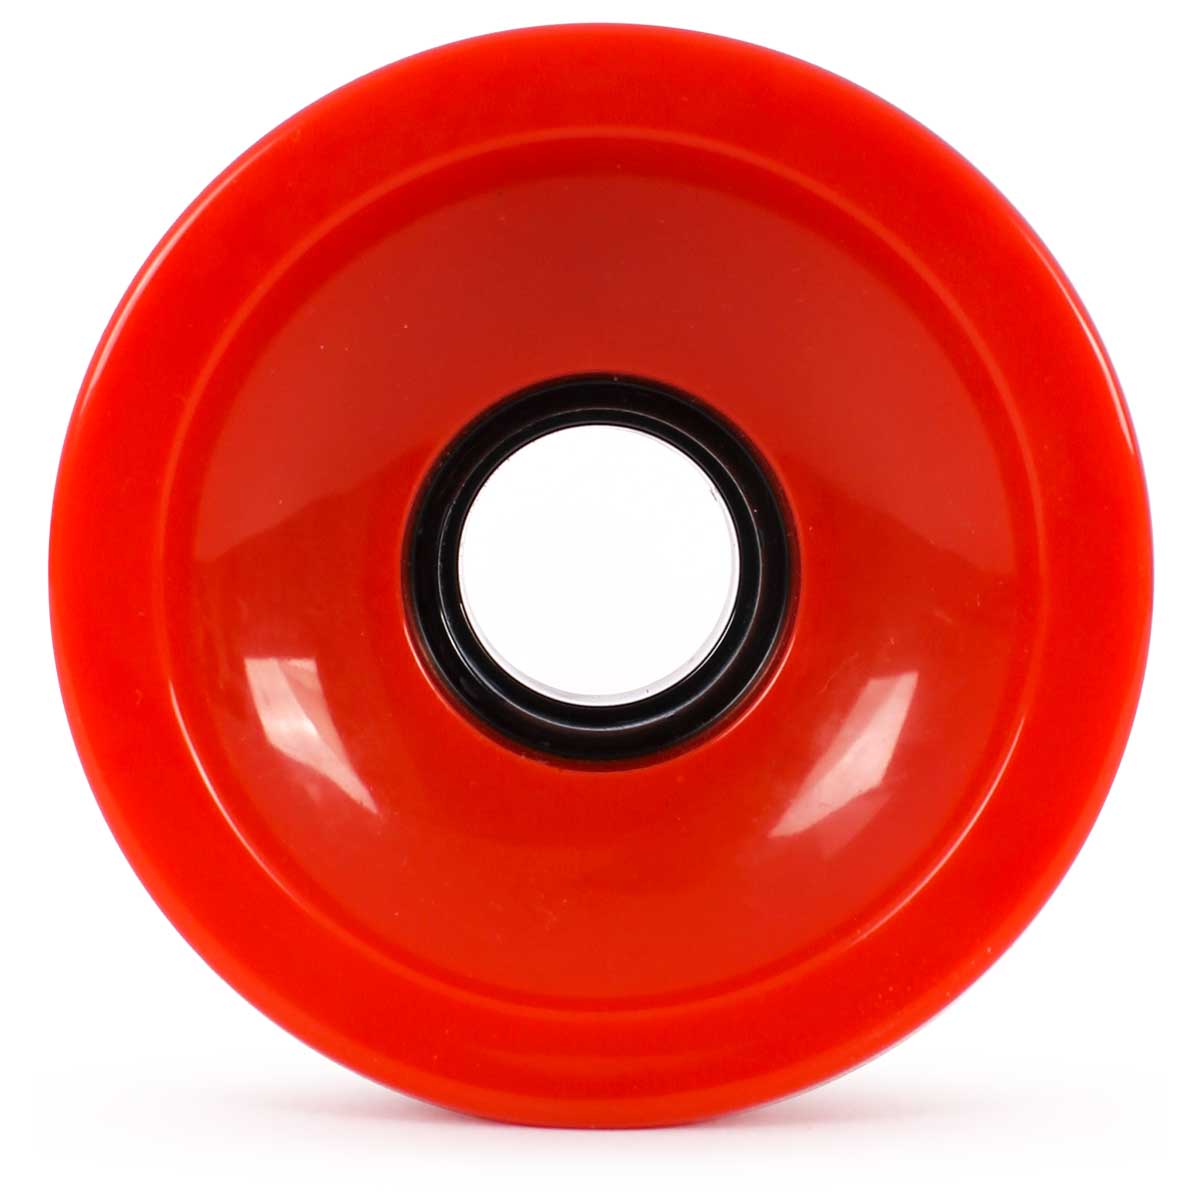 Adaptability sort price SoCal Skateshop Blank Longboard Wheels - Red 70mm 78a | SoCal Skateshop